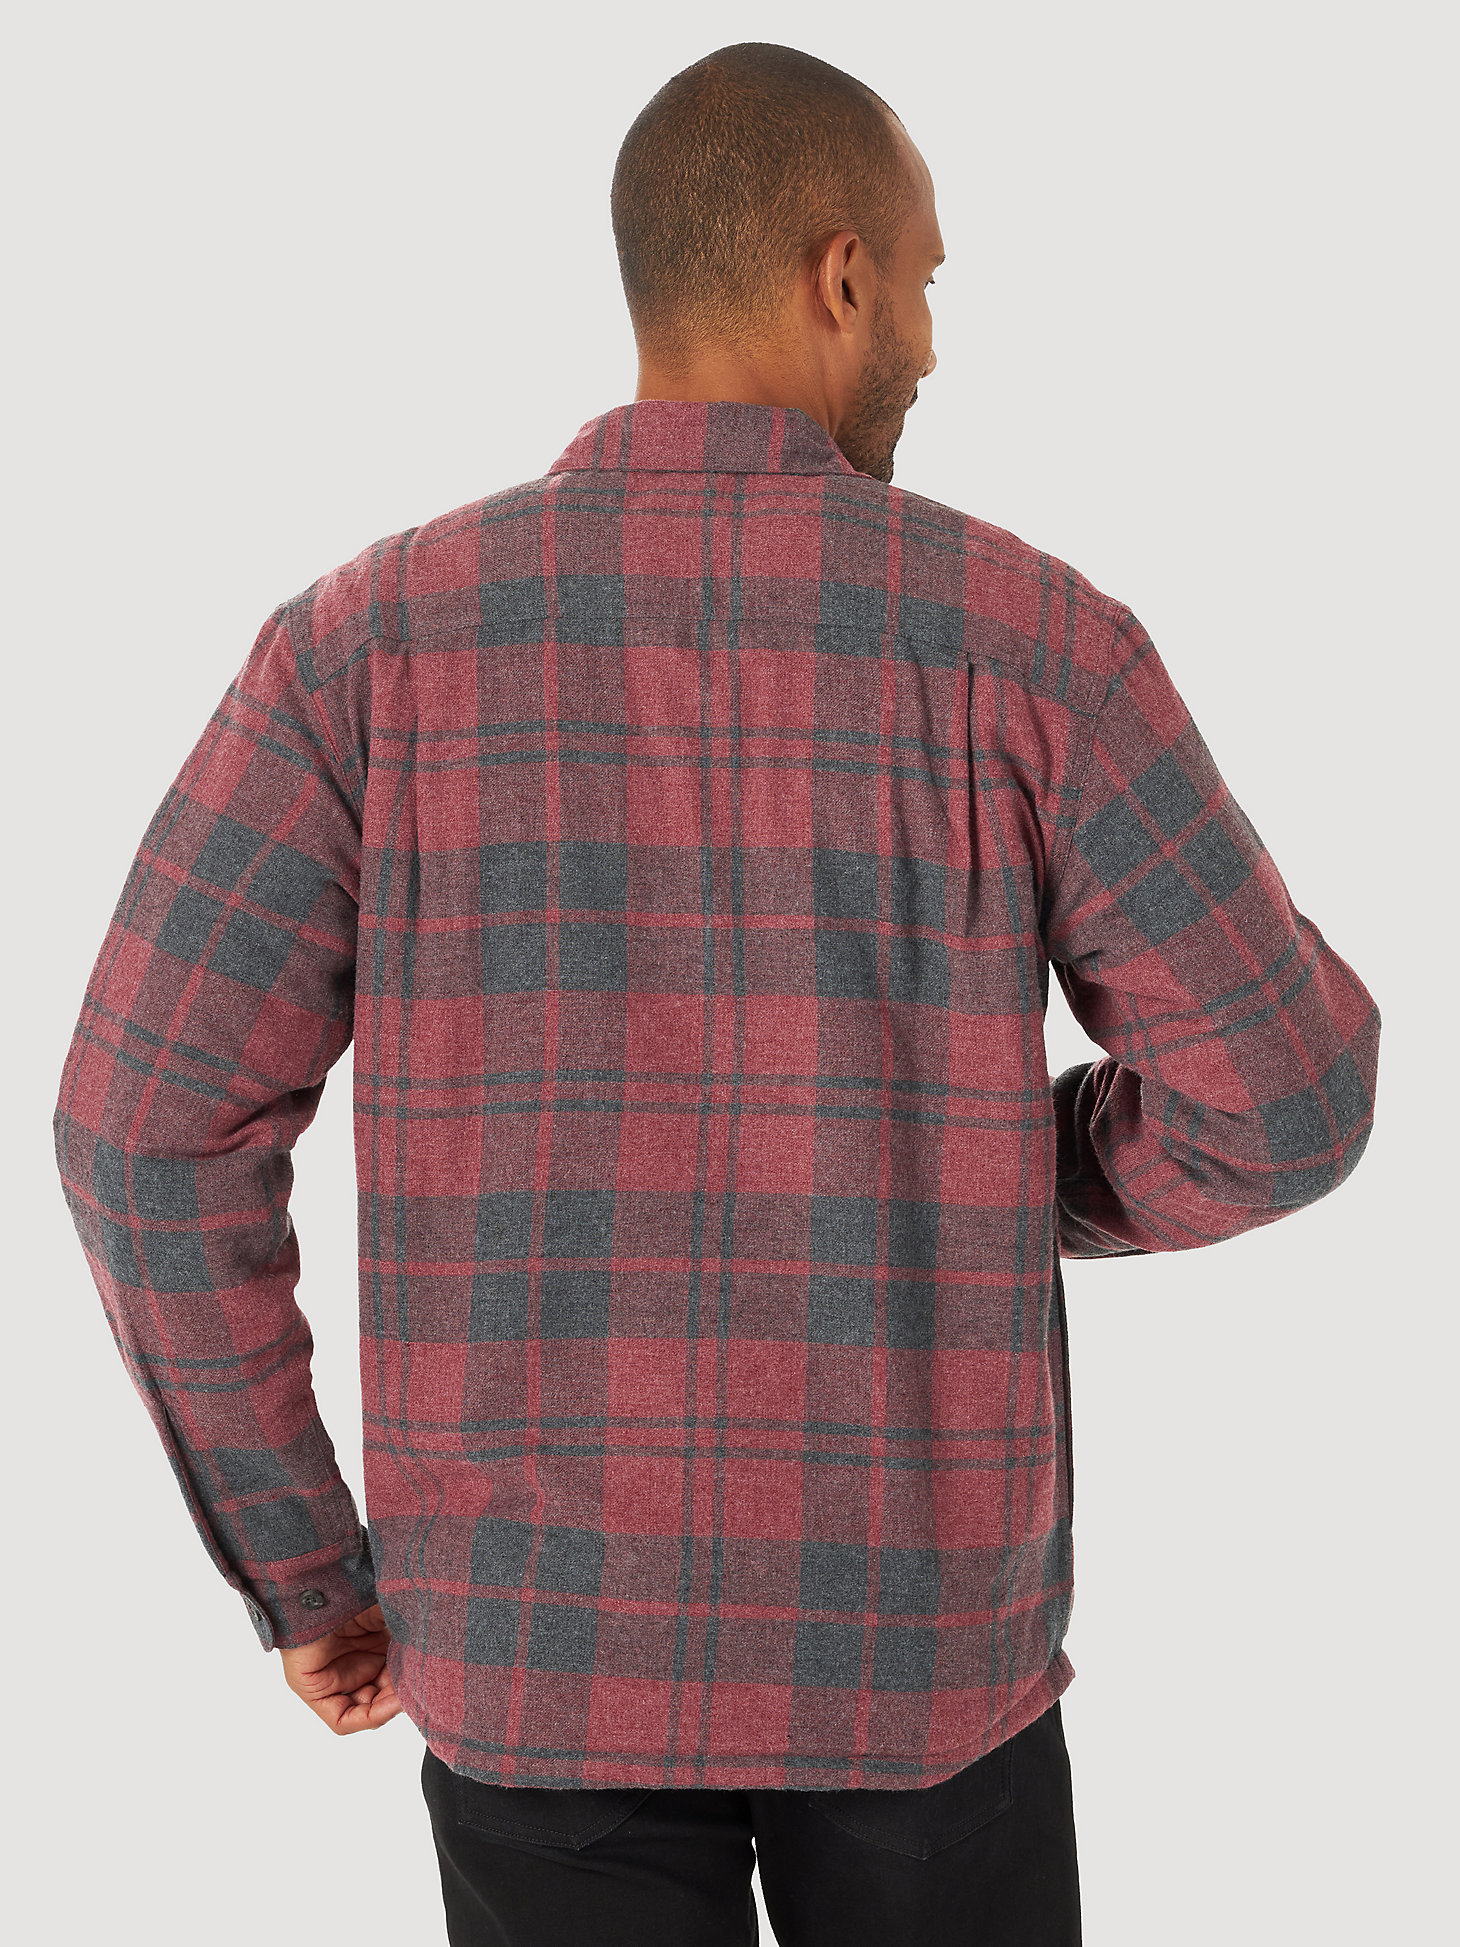 Men's Wrangler® Authentics Sherpa Lined Flannel Shirt in Zinfindel Heather alternative view 1